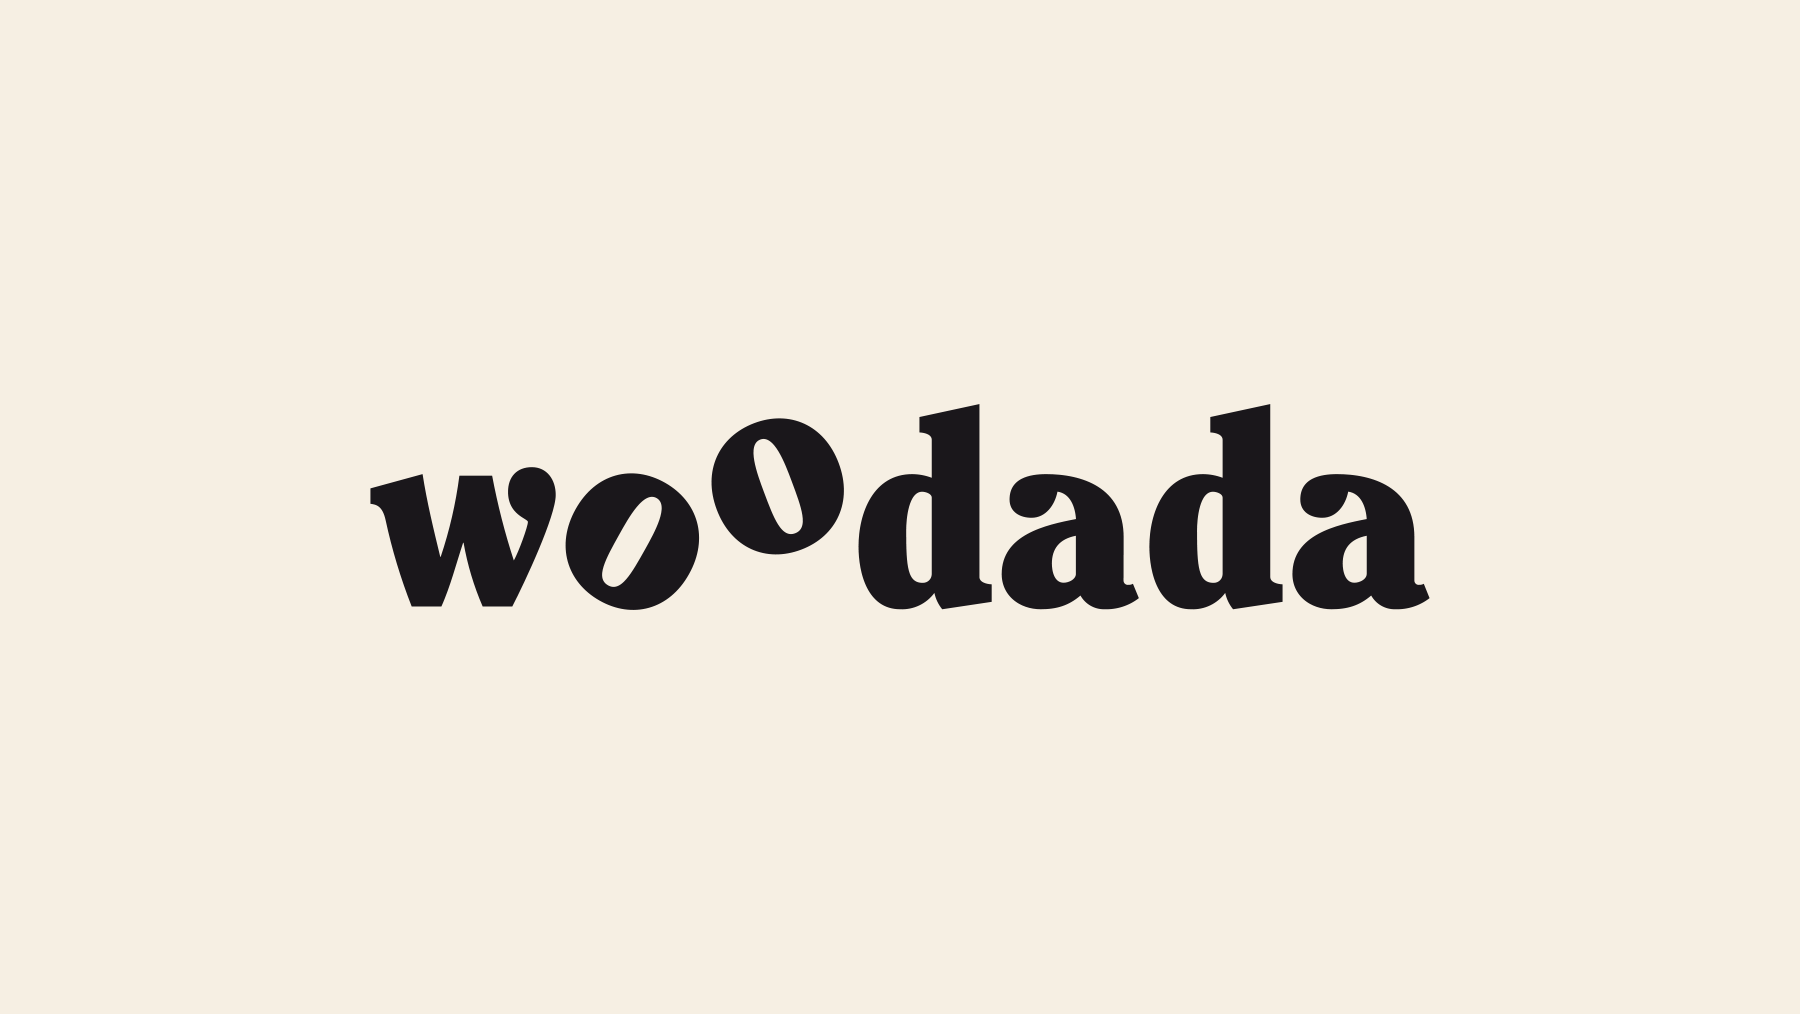 Branding Woodada, un proyecto de talleres gráficos para niños creado por monsieur madame